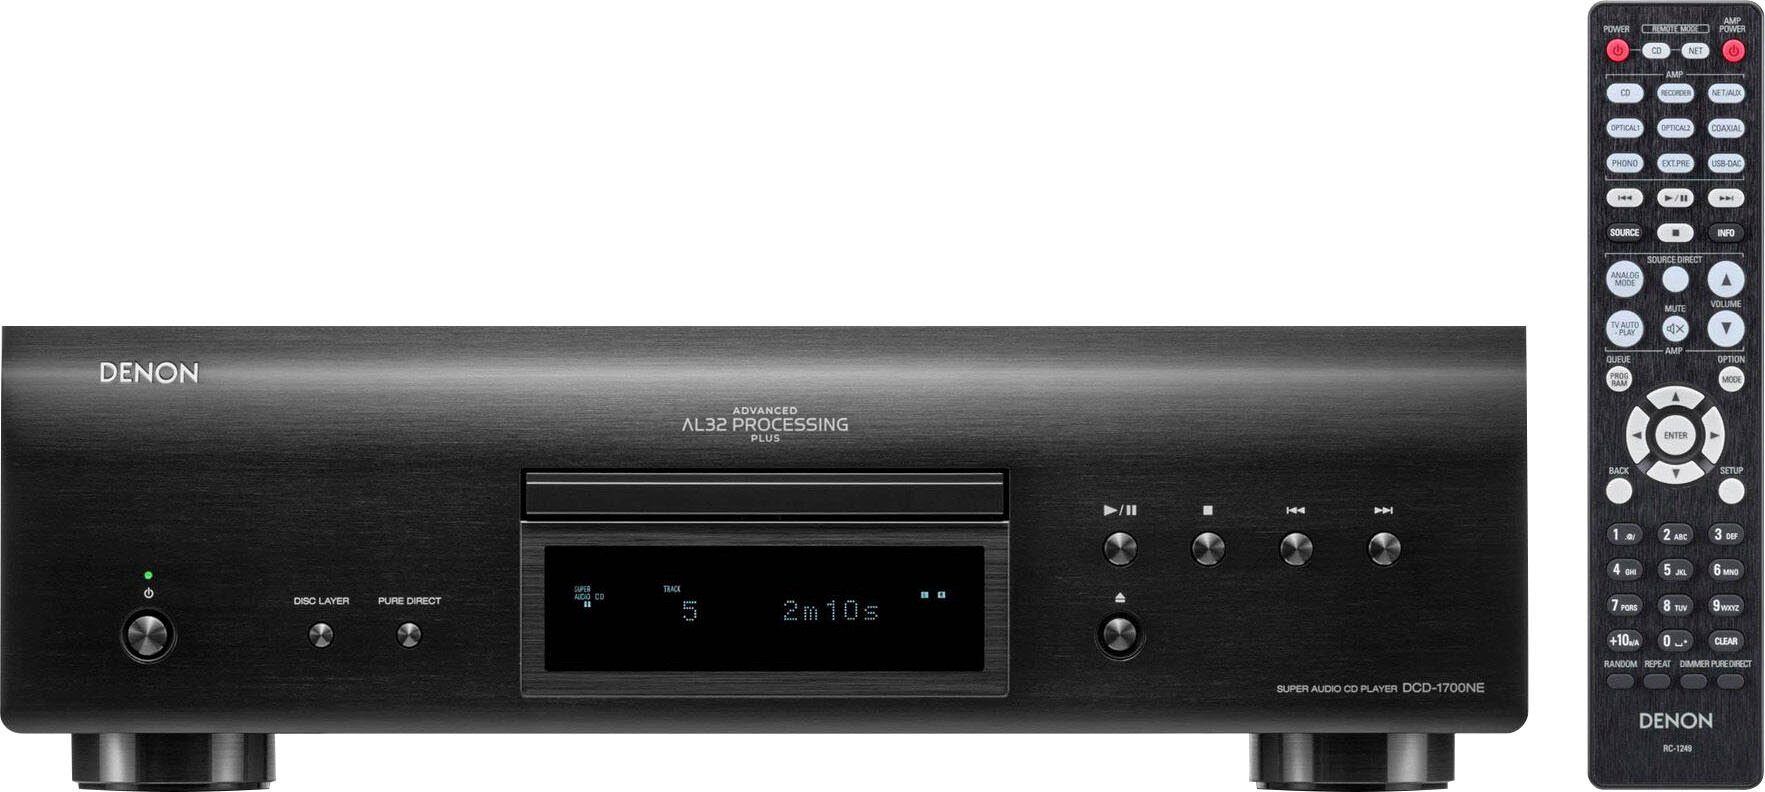 Denon DCD-1700NE CD-Player schwarz